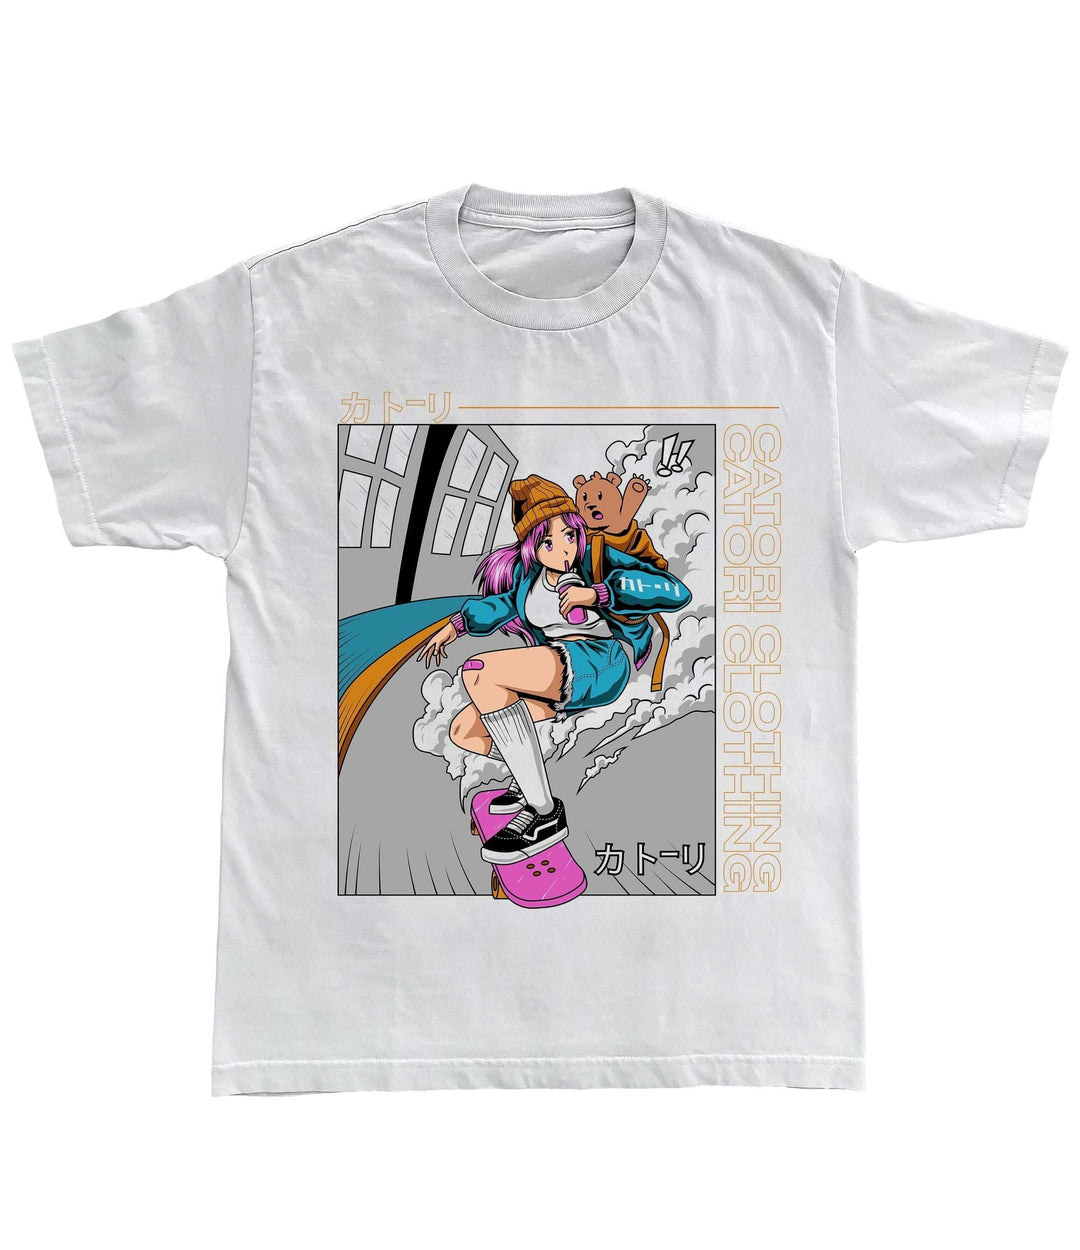 SKATER GIRL T-SHIRT at Catori Clothing | Graphic & Anime Tees, Hoodies & Sweatshirts 